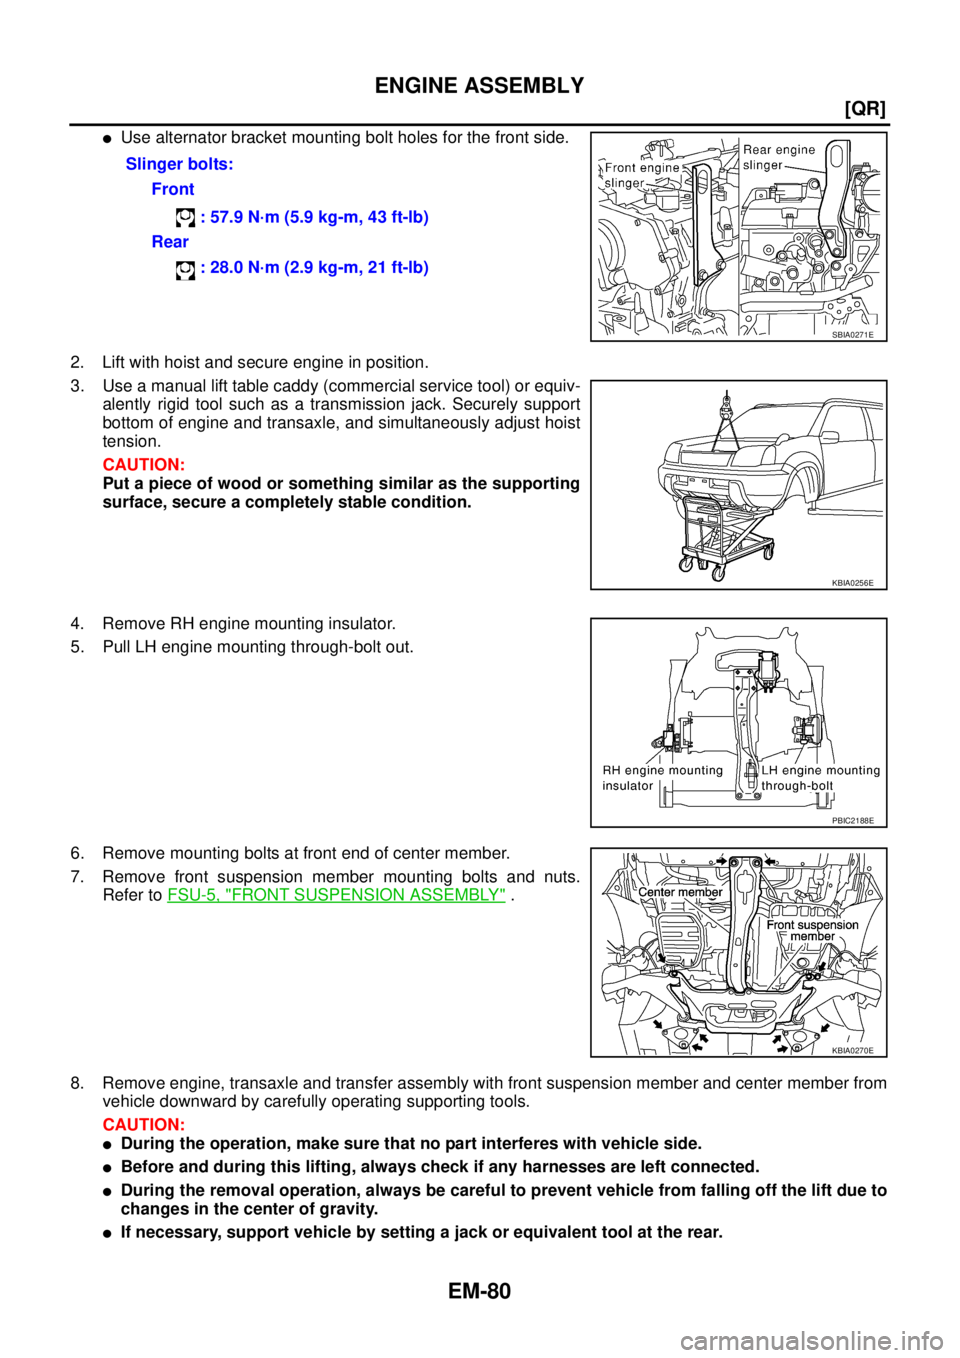 NISSAN X-TRAIL 2003  Service User Guide EM-80
[QR]
ENGINE ASSEMBLY
 
Use alternator bracket mounting bolt holes for the front side.
2. Lift with hoist and secure engine in position.
3. Use a manual lift table caddy (commercial service tool